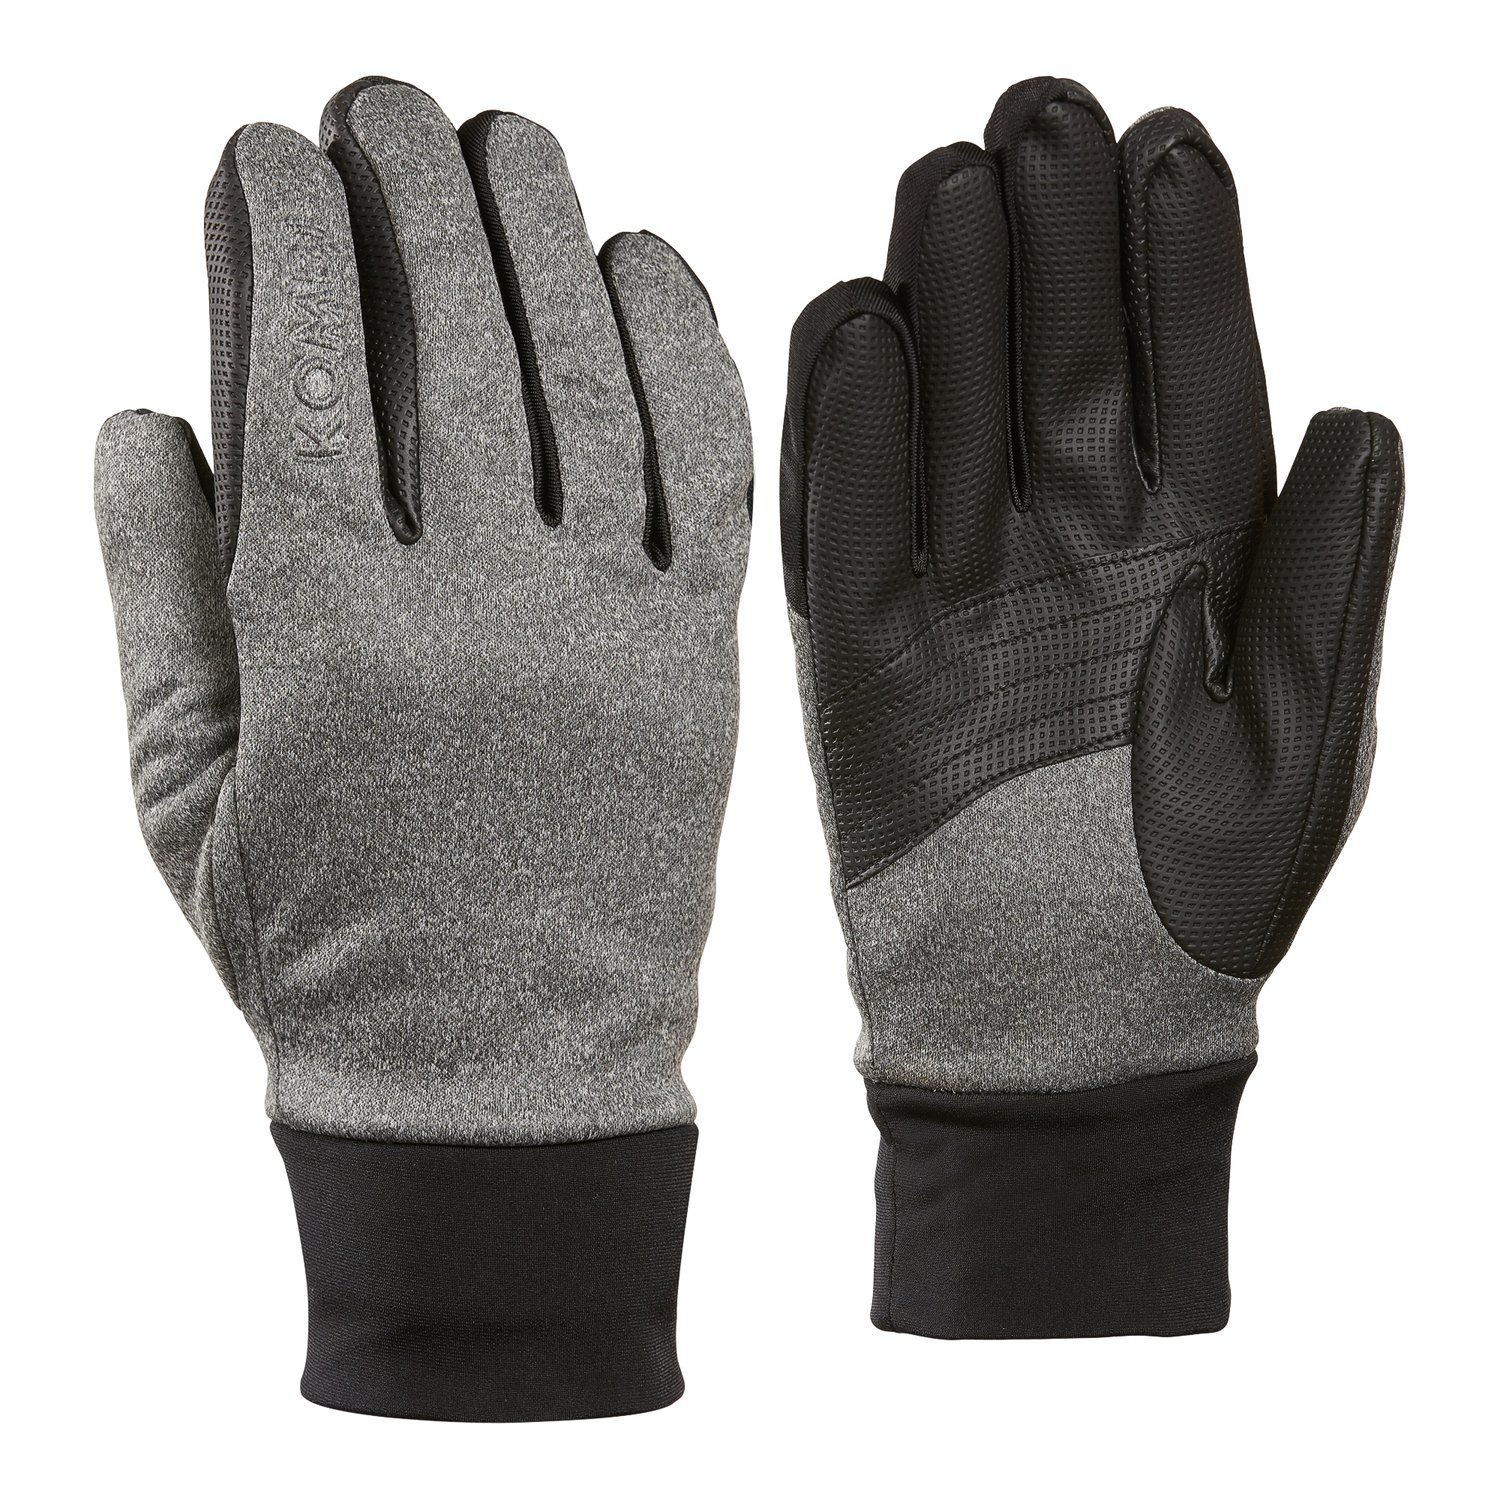 Men's Winter Multi-Tasker Gloves HEATHER GREY